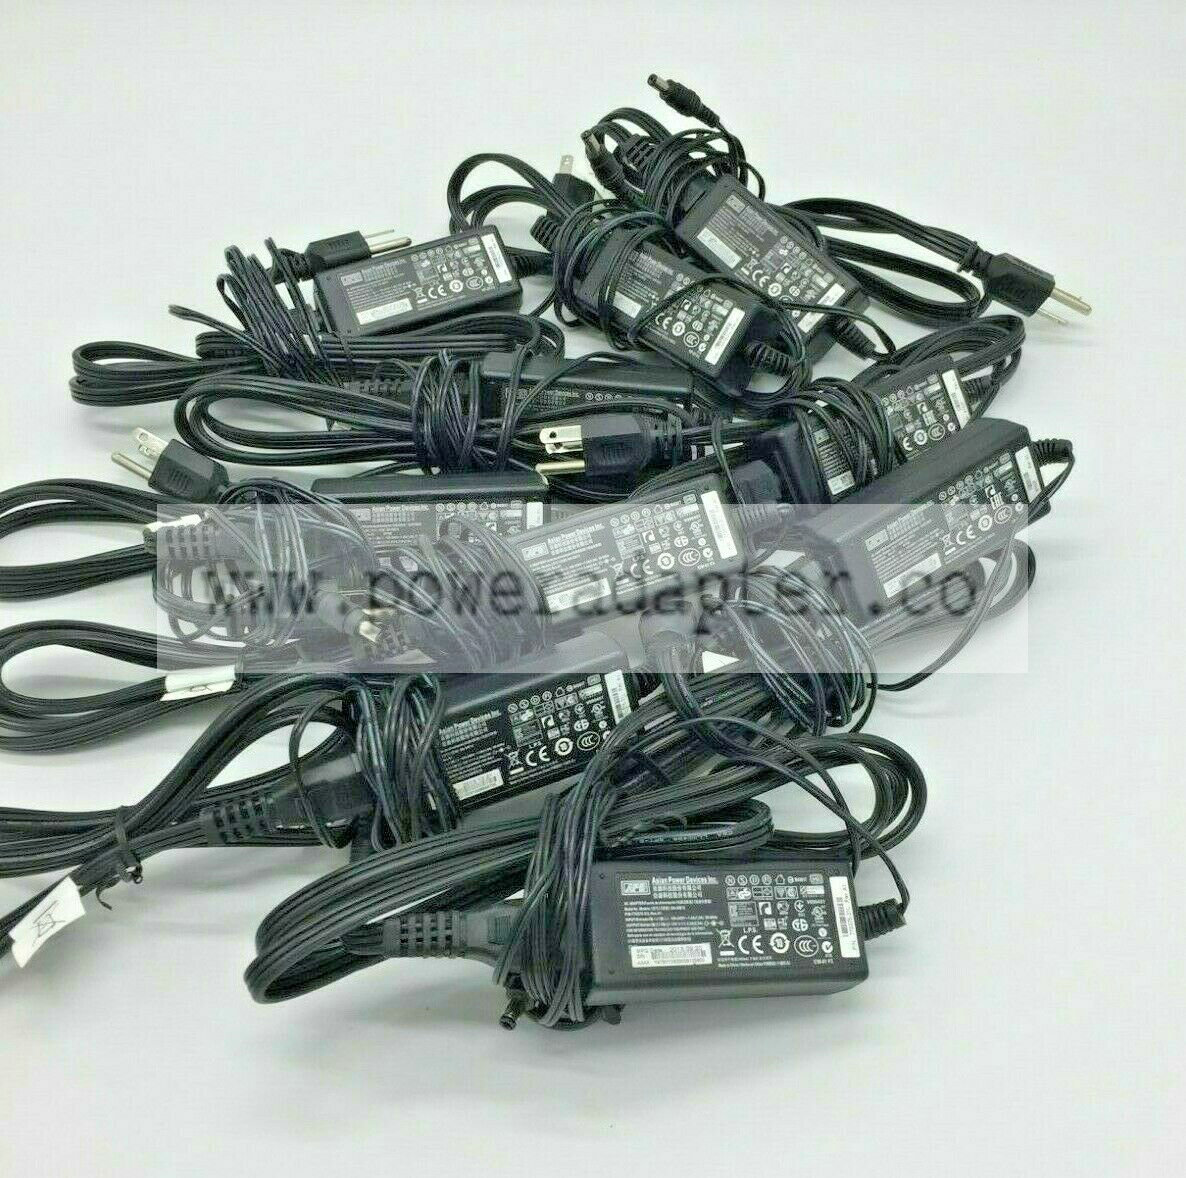 lot of 10 WYSE APD AC Adapter DA-30E12 770375-31L 12V 2.5A 9y62f charger power Output Voltage(s): 12 V Brand: WYSE T